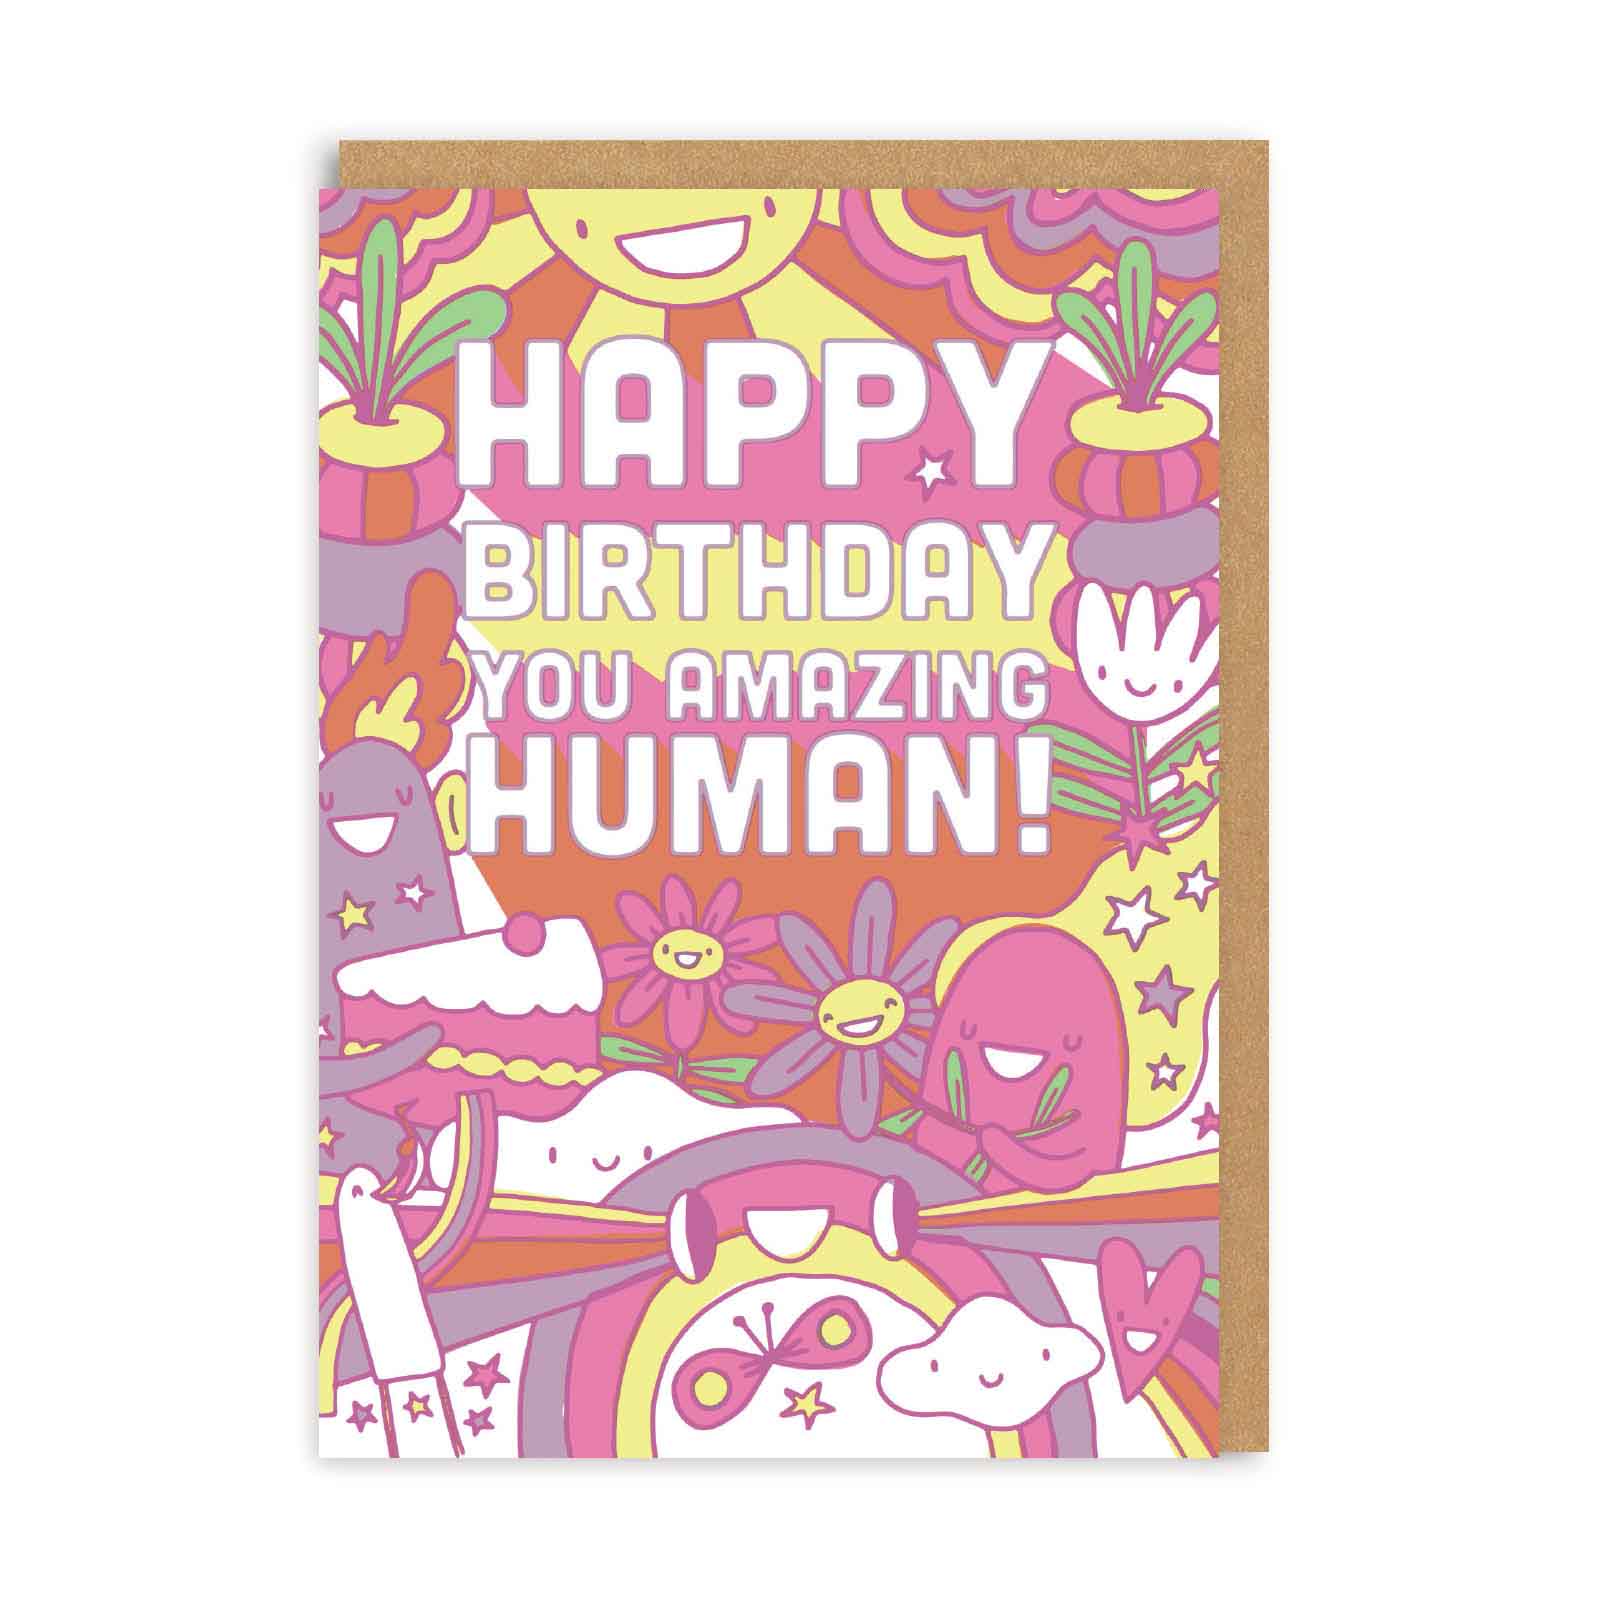 You Amazing Human Birthday Card